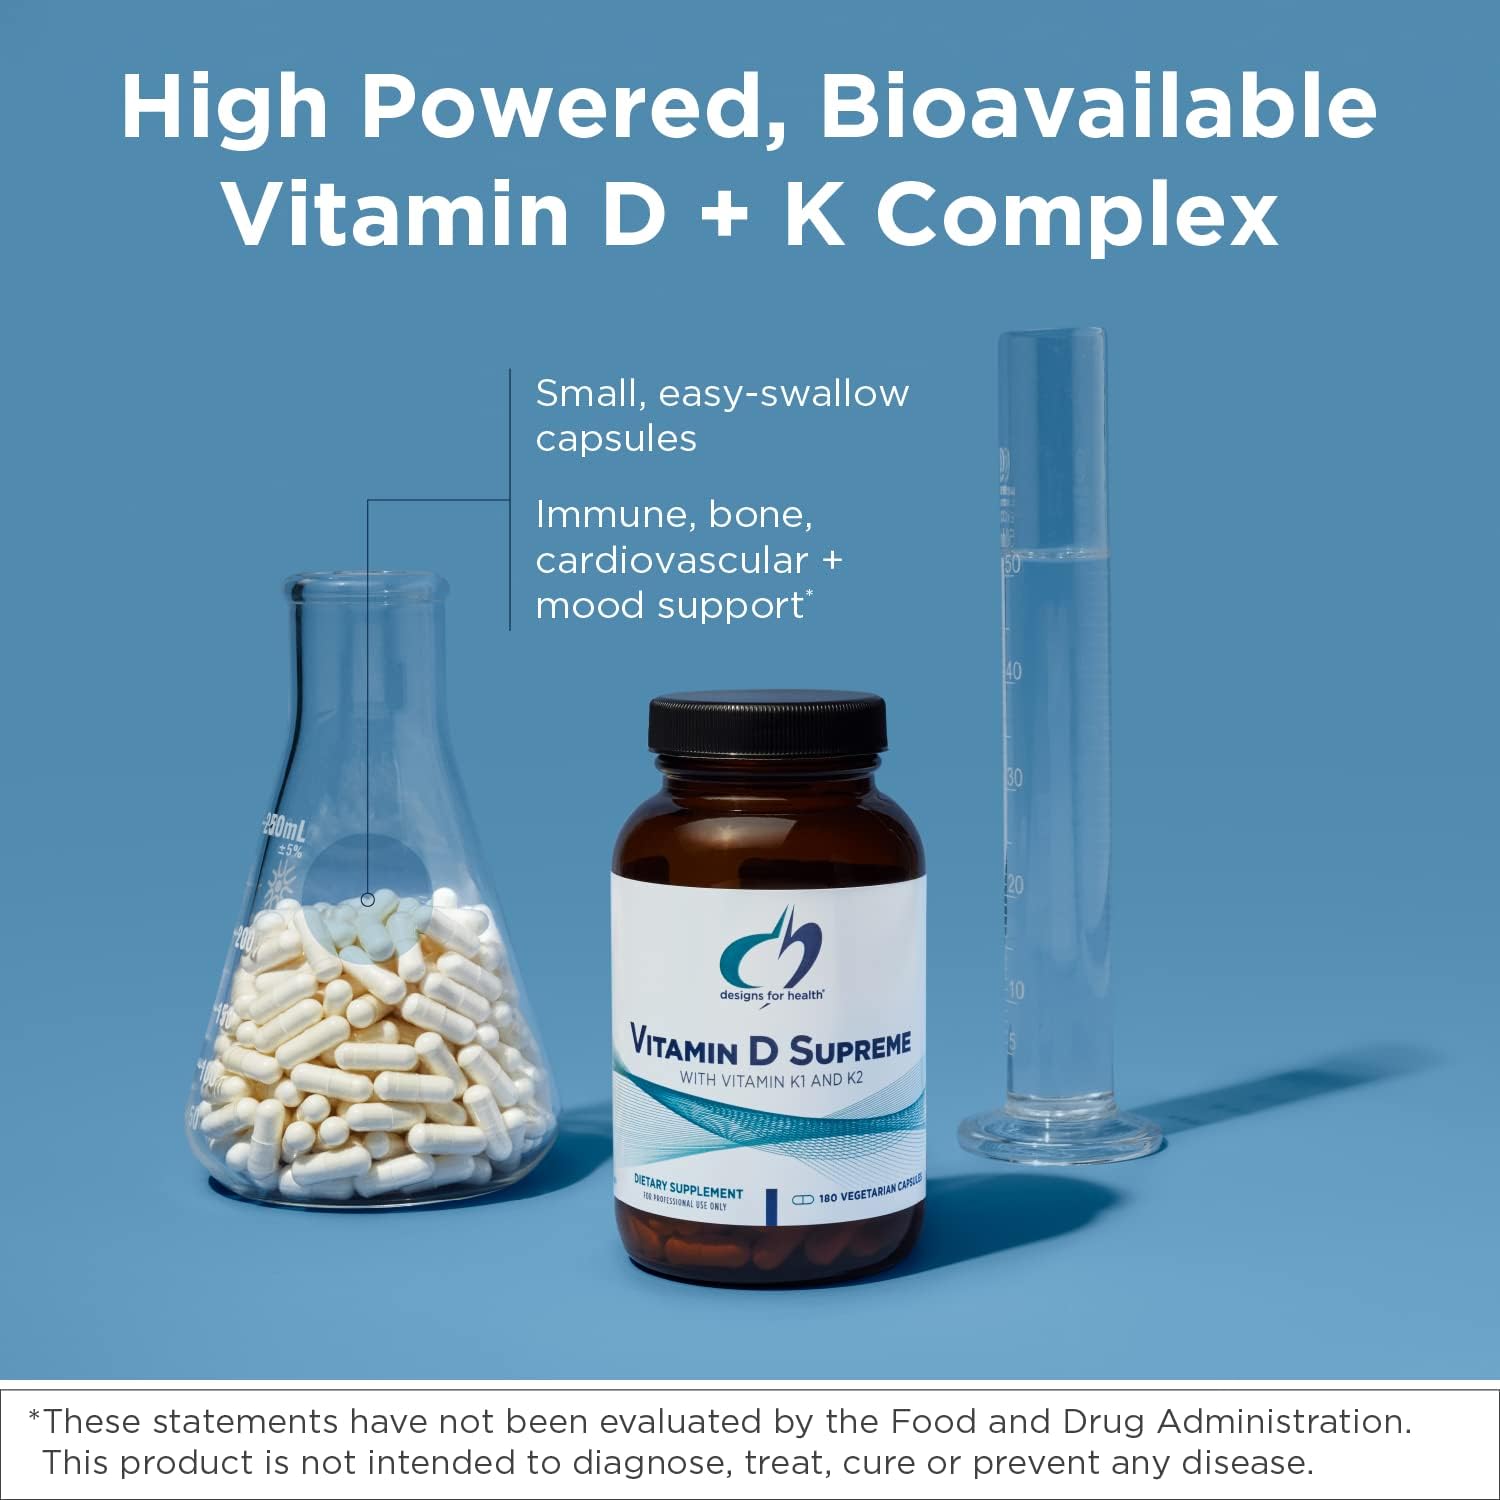 Designs for Health Vitamin D Supreme (60 Capsules) + Zinc Supreme (90 Capsules) Bundle - Vitamin D3 5000 IU with 2000mcg Vitamin K + Zinc Bisglycinate Chelate Immune Support (2 Products)